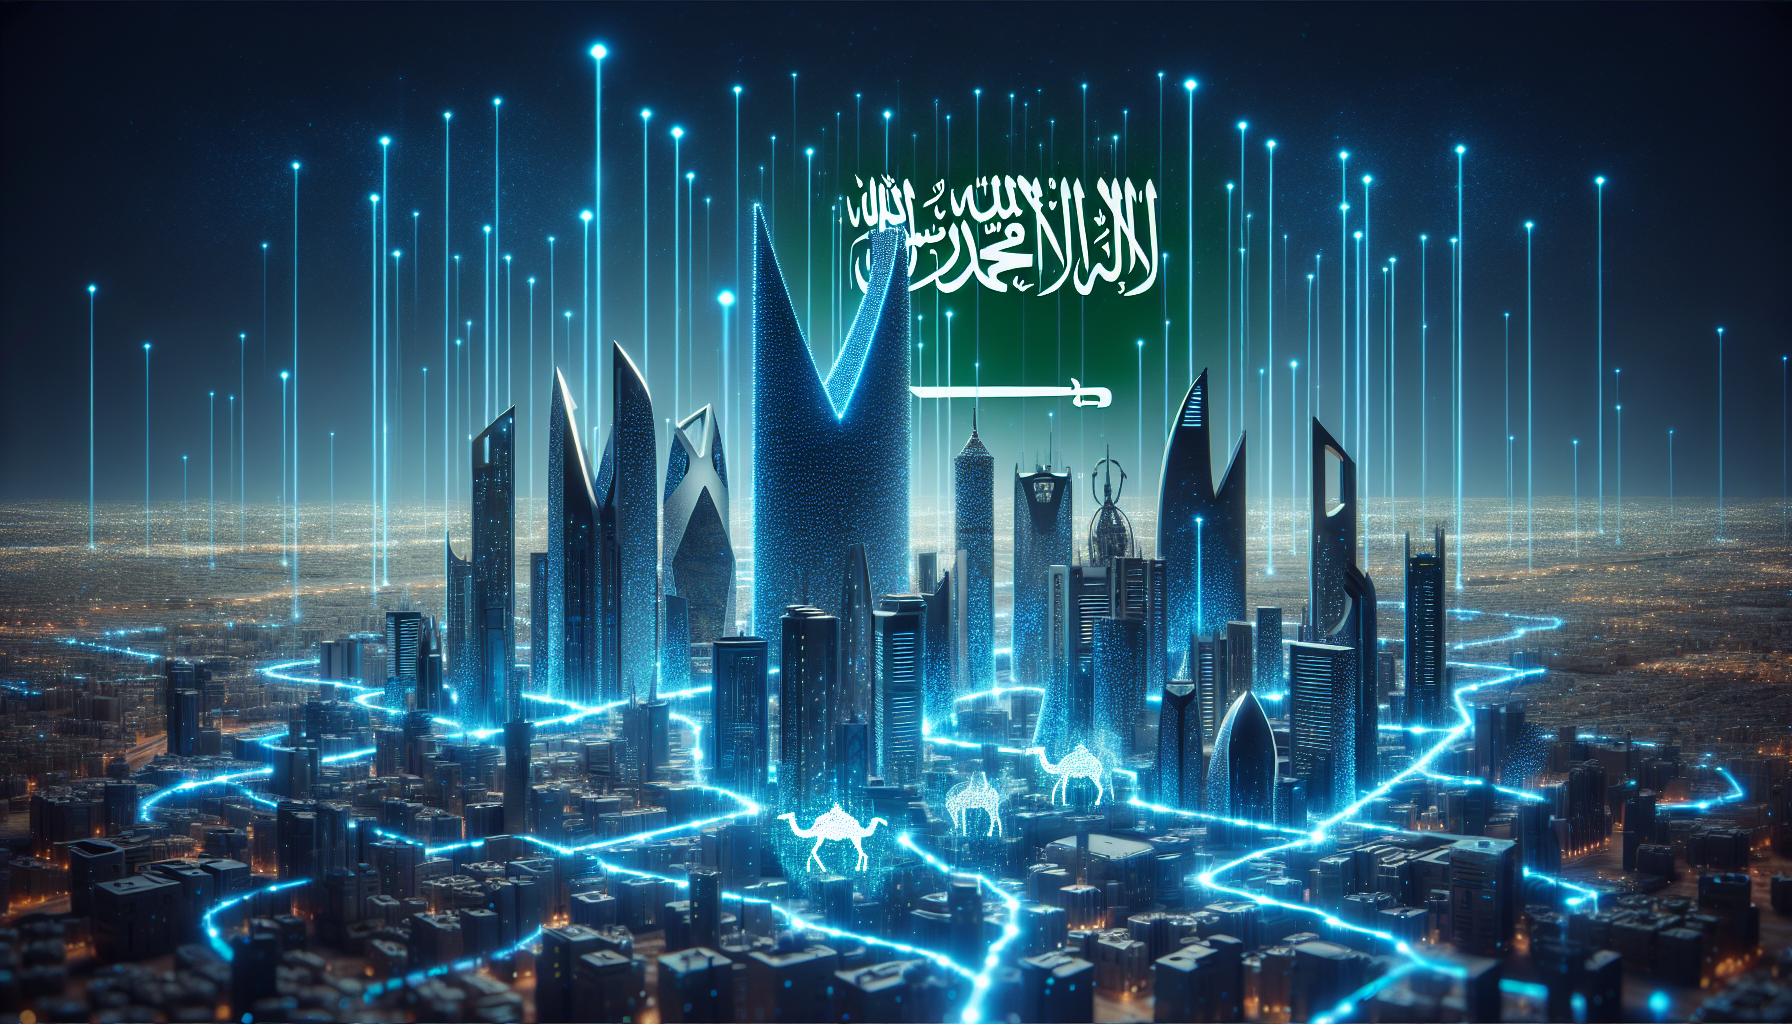 Abstract digital illustration representing Saudi Arabia's digital transformation